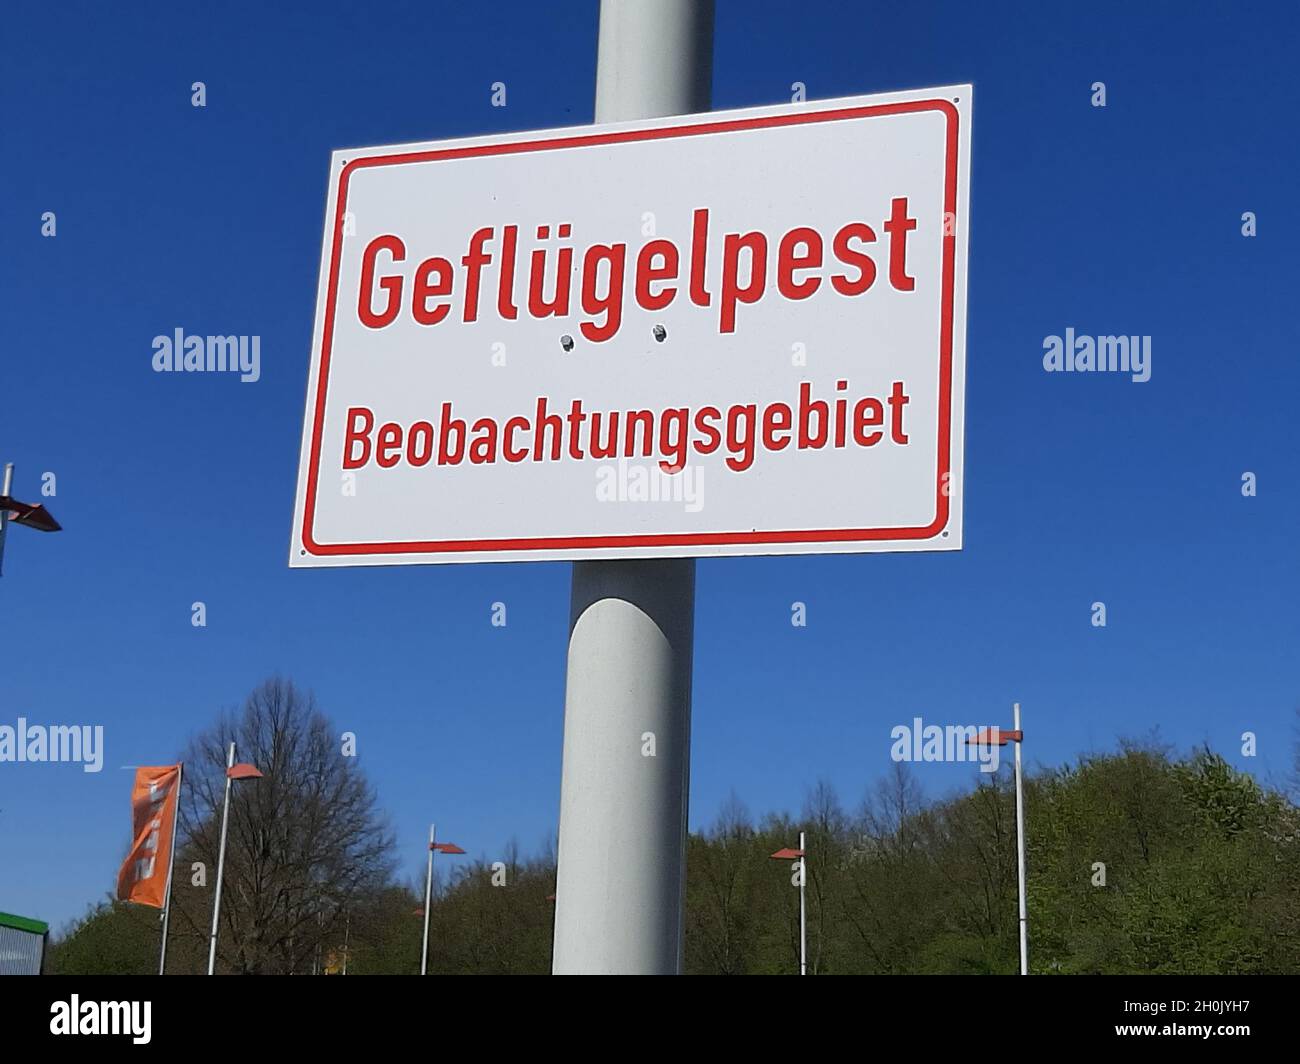 Señal Gefluegelpest Beobachtungsgebiet, gripe aviar, zona de observación, Alemania Foto de stock